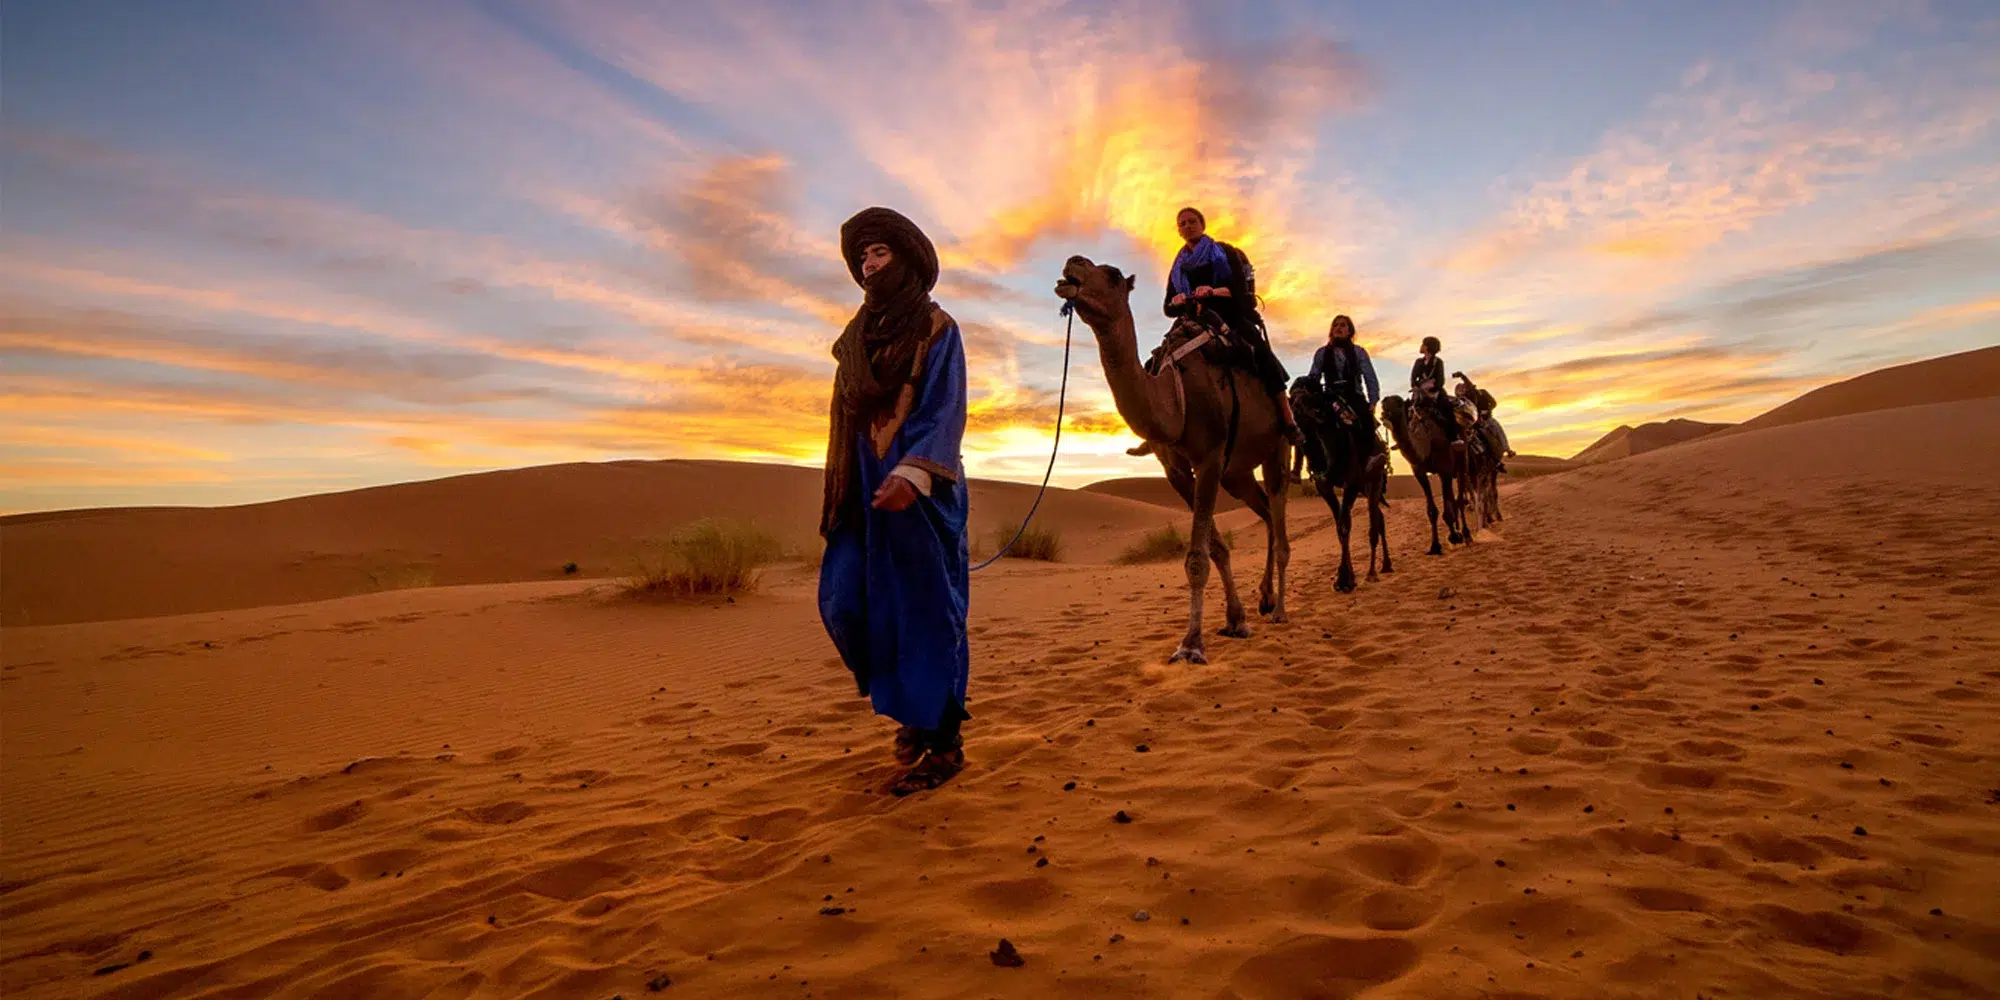 3-day Desert trip from Marrakech – Erg Chigaga Desert